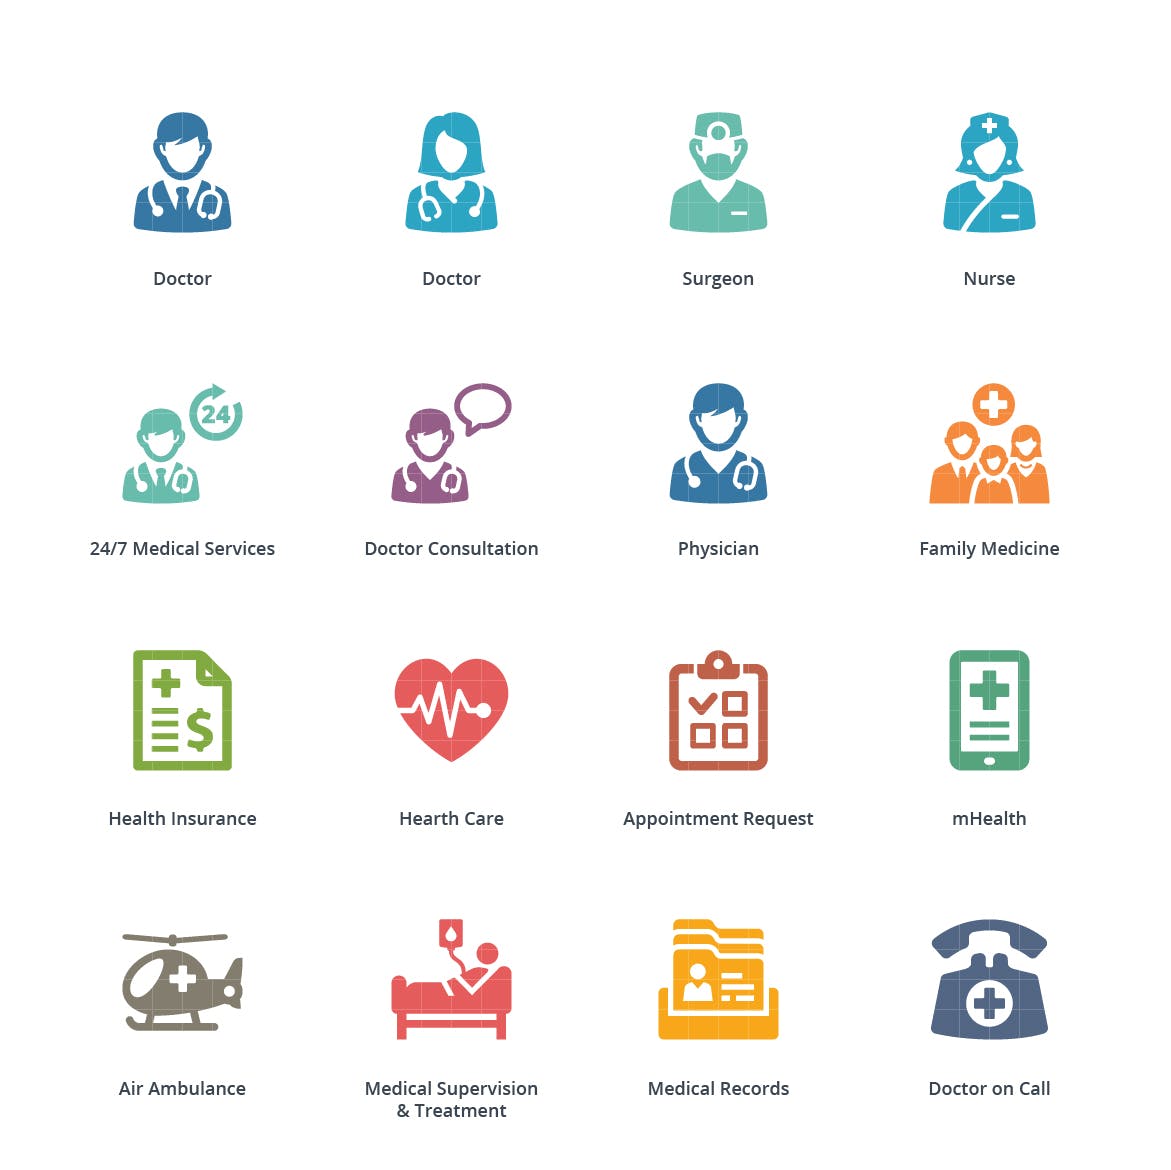 Sympa系列-医疗服务彩色蚂蚁素材精选图标集v1 Colored Medical Services Icons Set 1- Sympa Series插图(1)